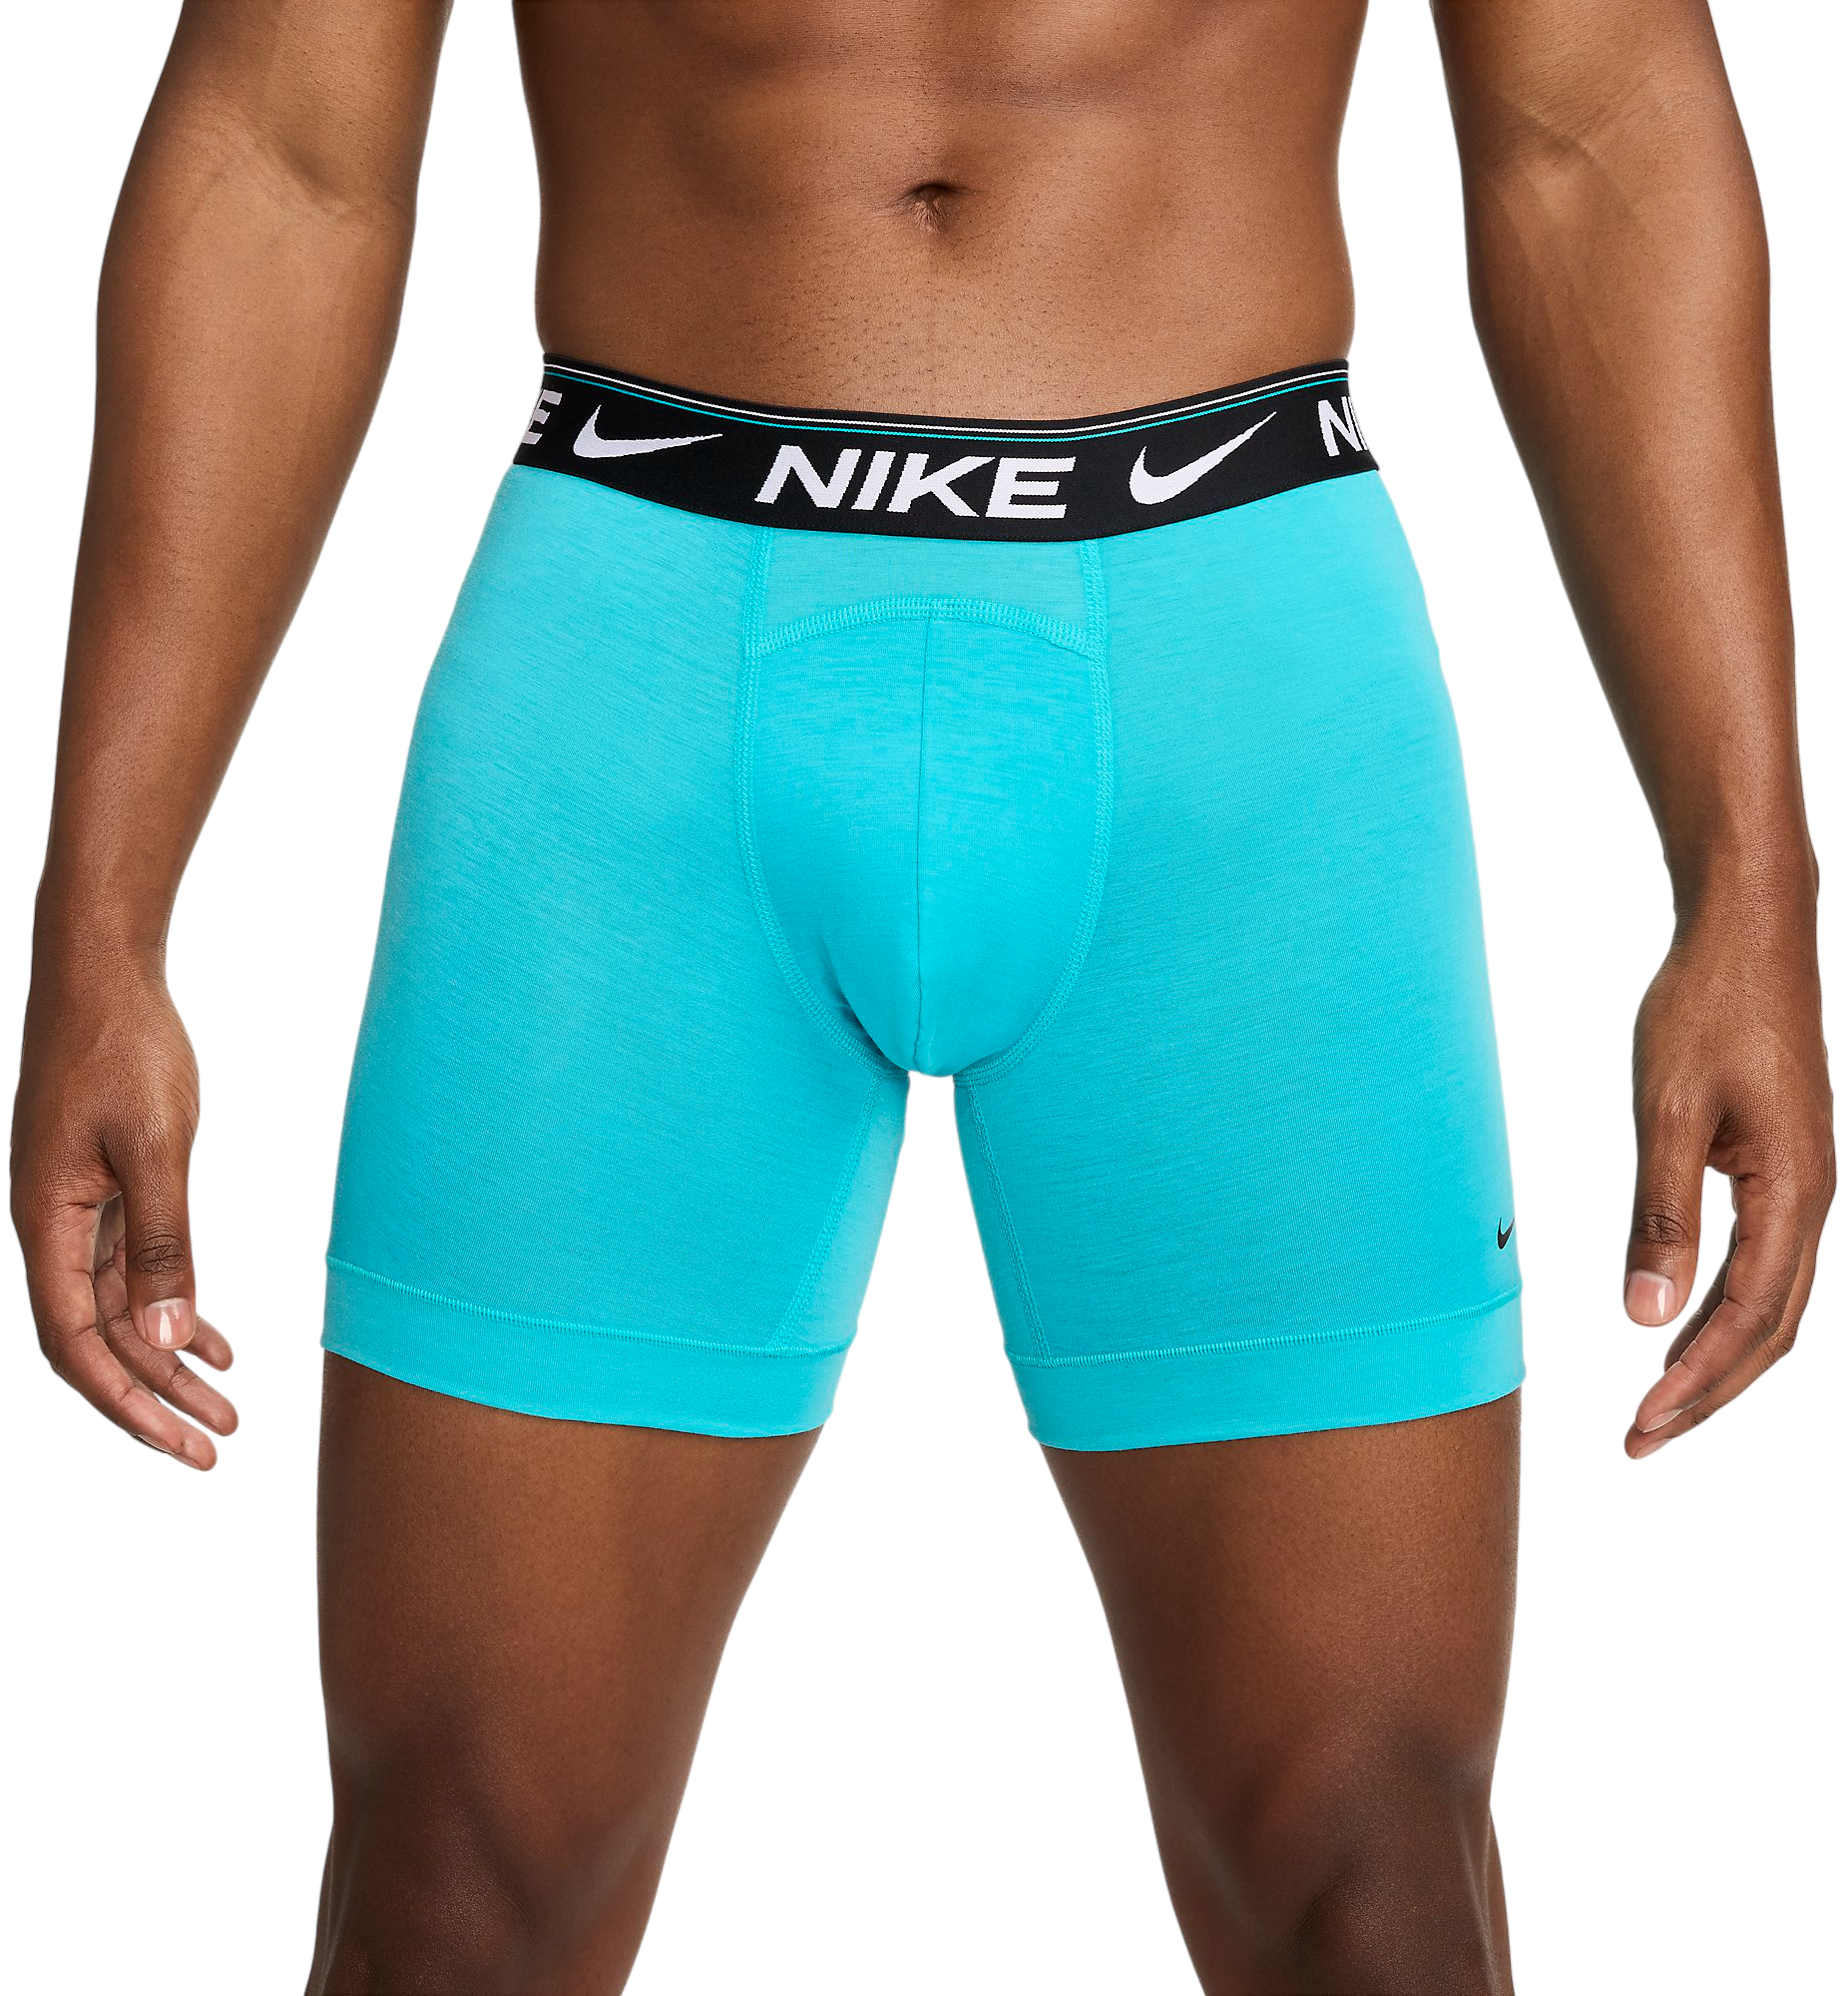 Boxershorts Nike Ultra Boxer Trunk